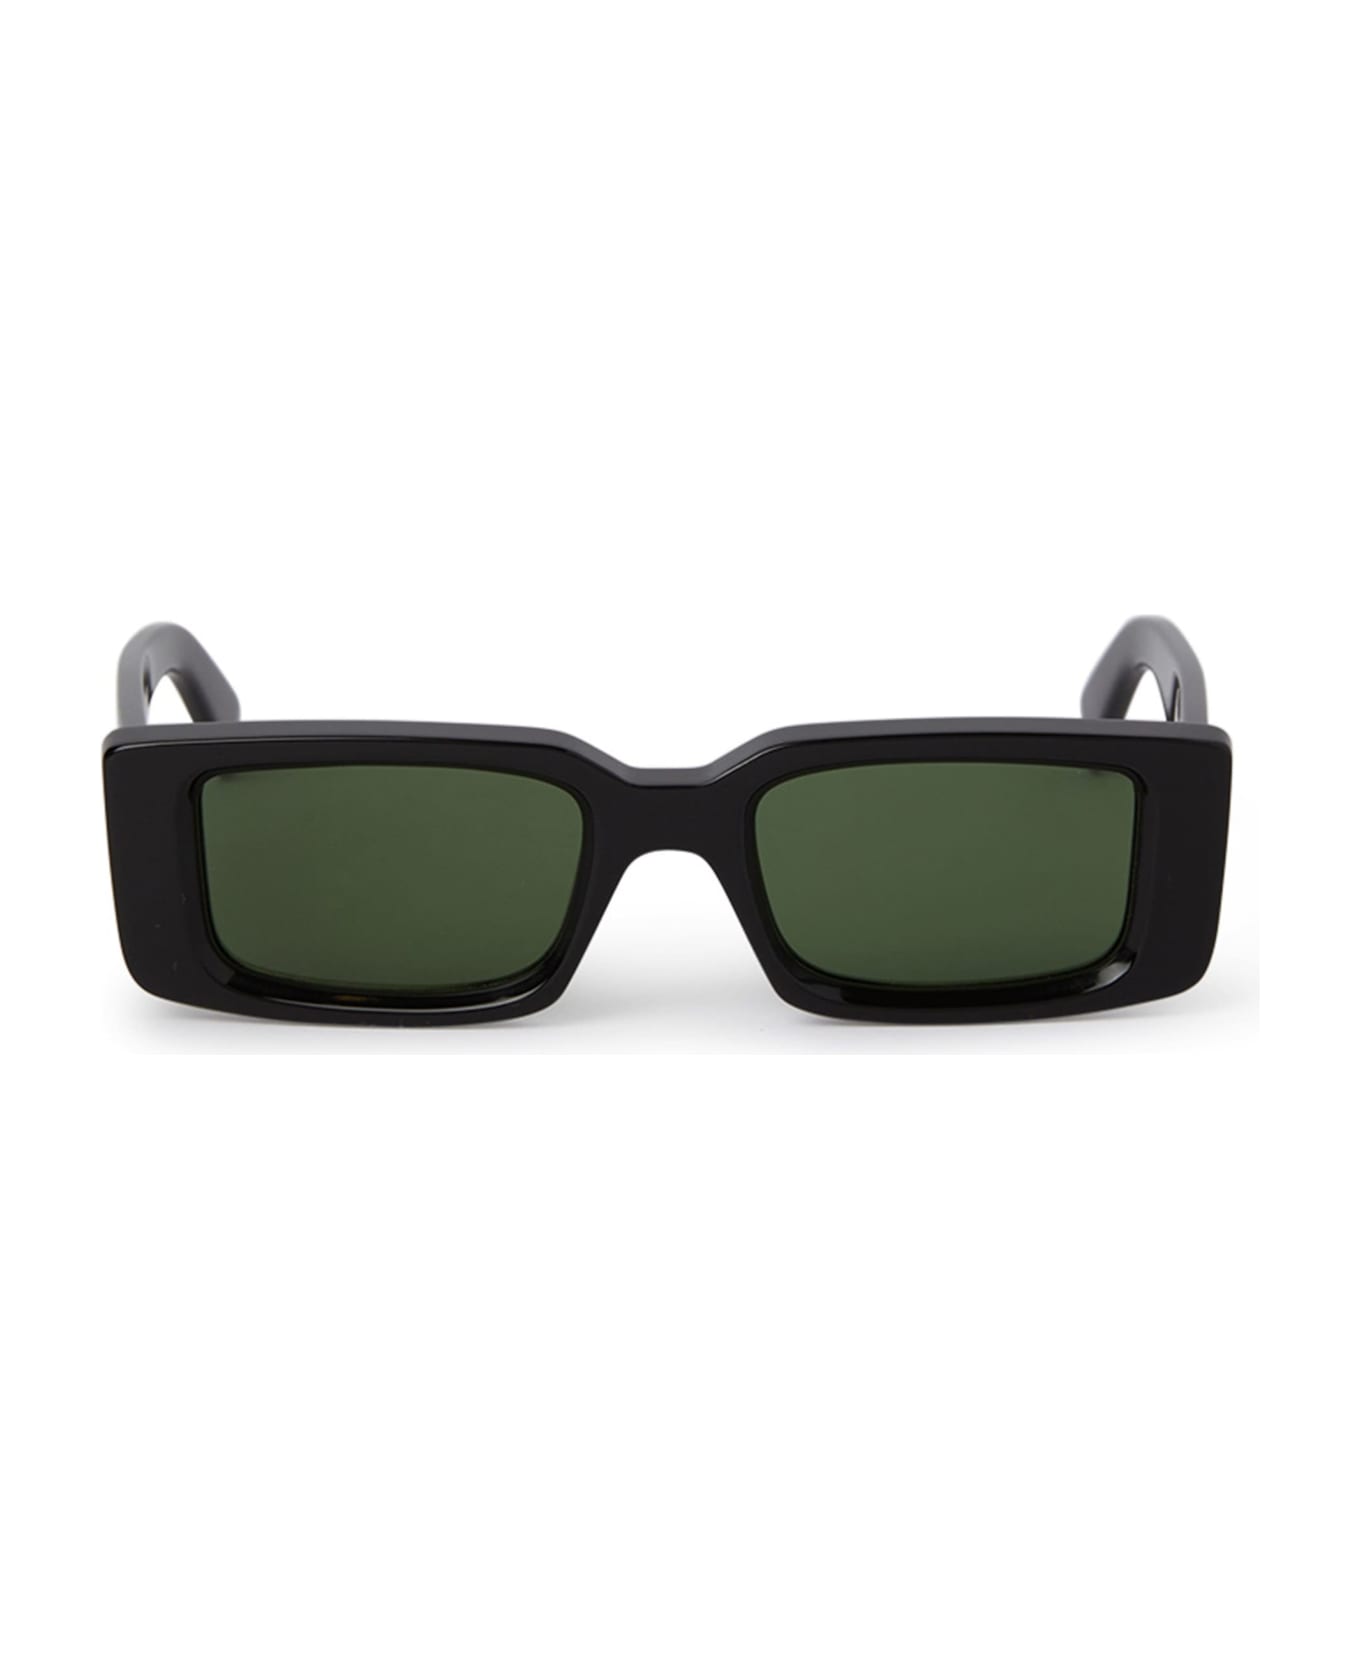 Off-White 'arthur' Sunglasses - Black